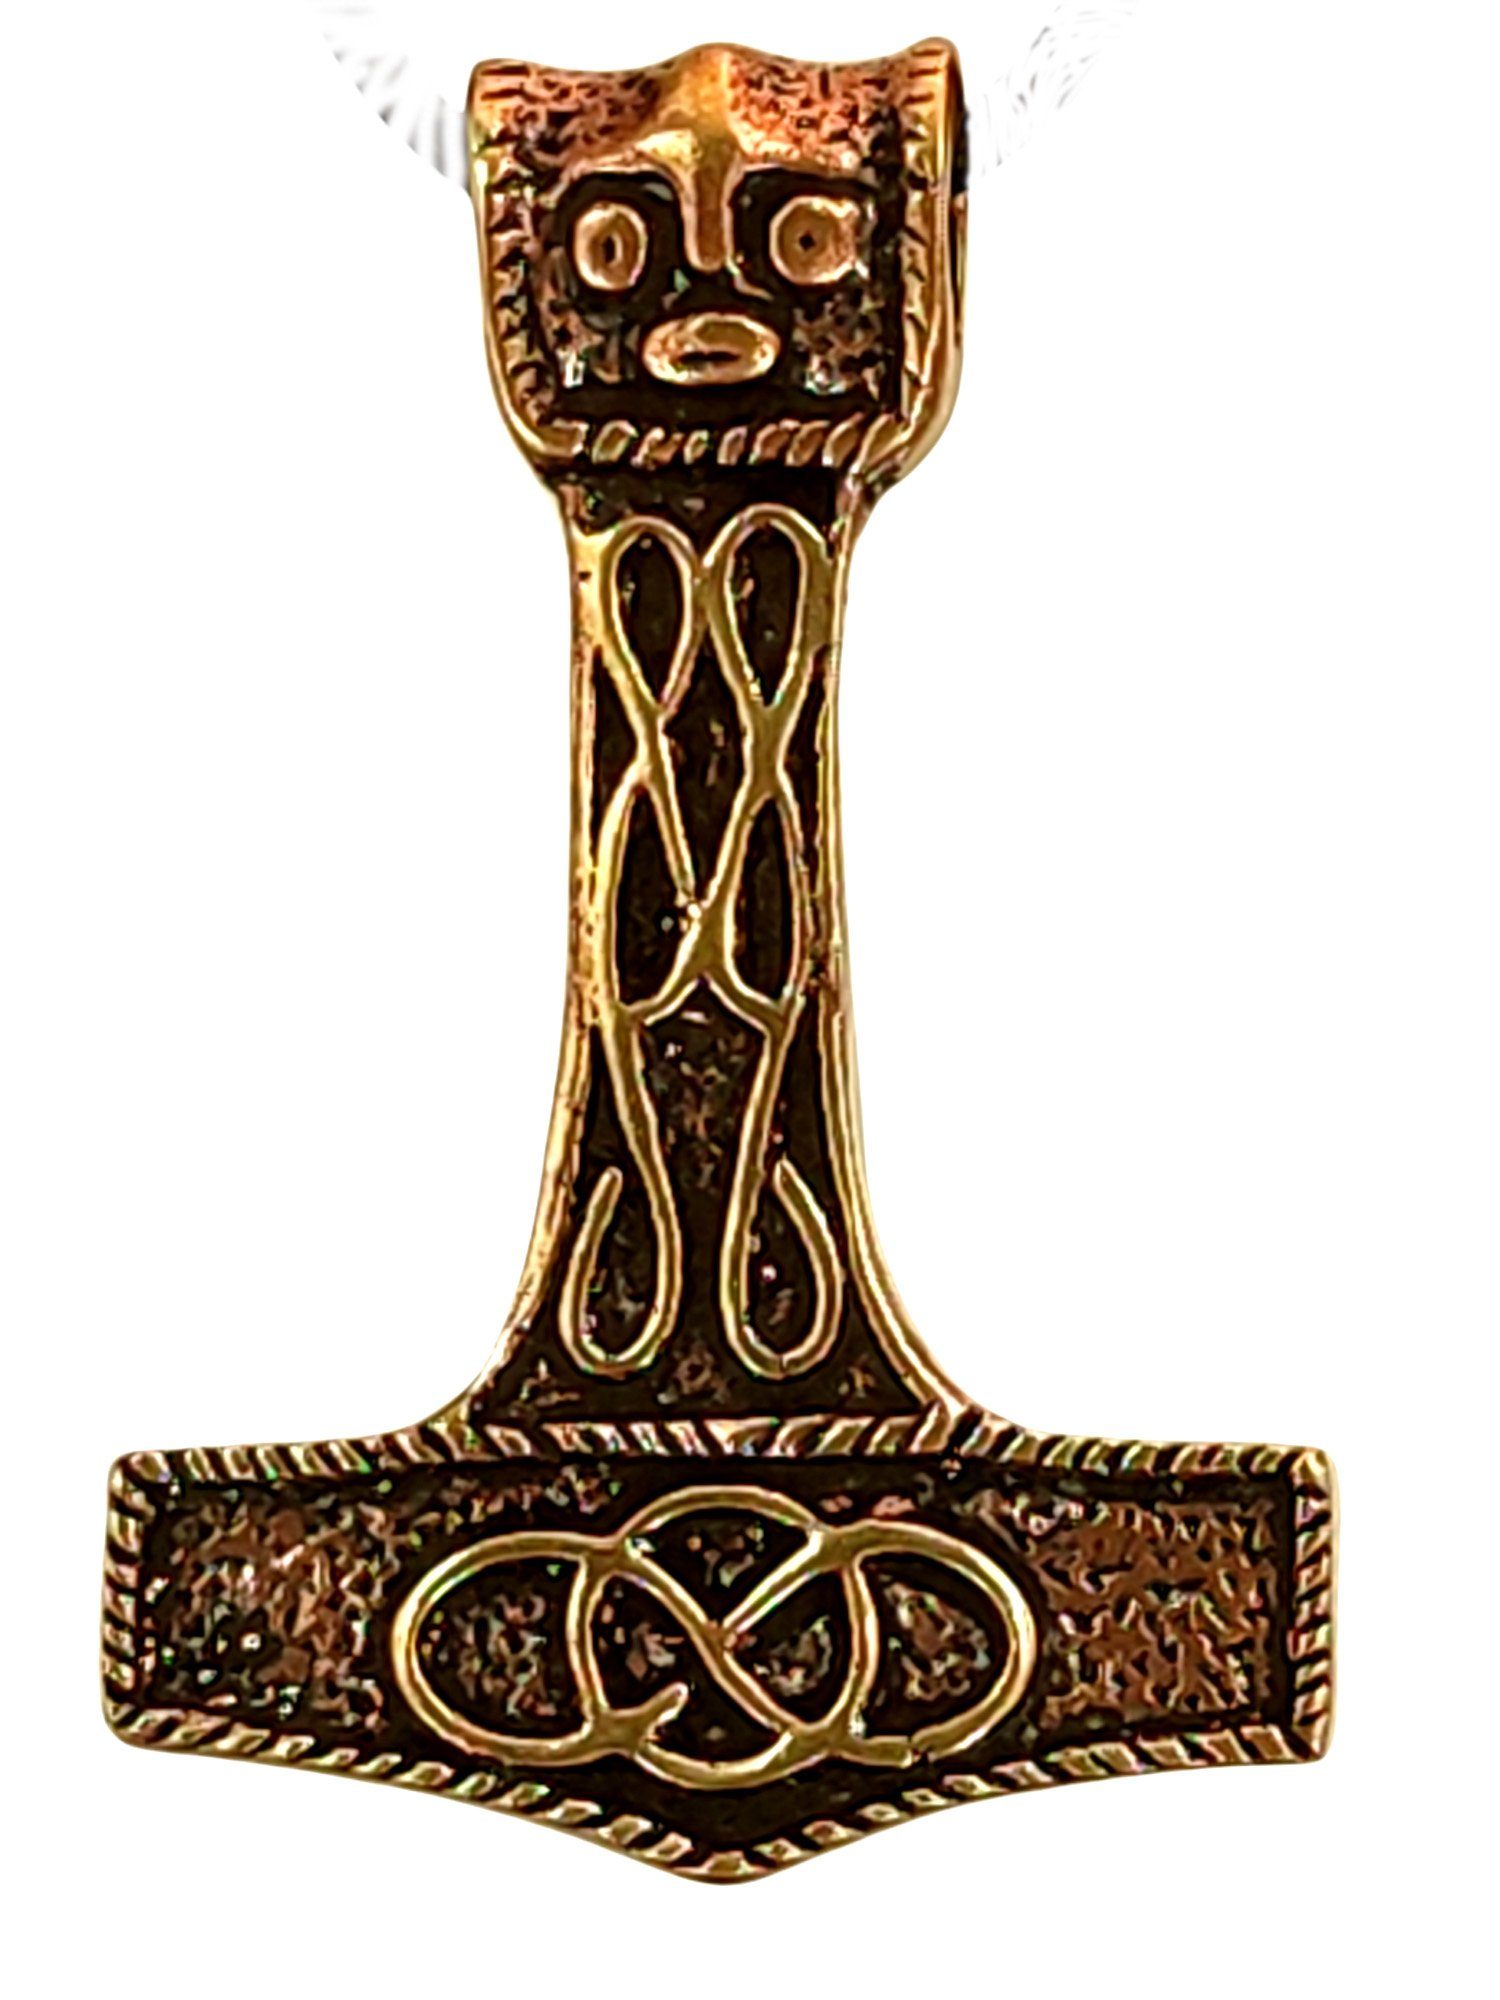 Thorhammer Anhänger Kettenanhänger großer Knoten Leather Thorshammer Thor 77A aus Kiss Hammer Bronze of Mjölnir